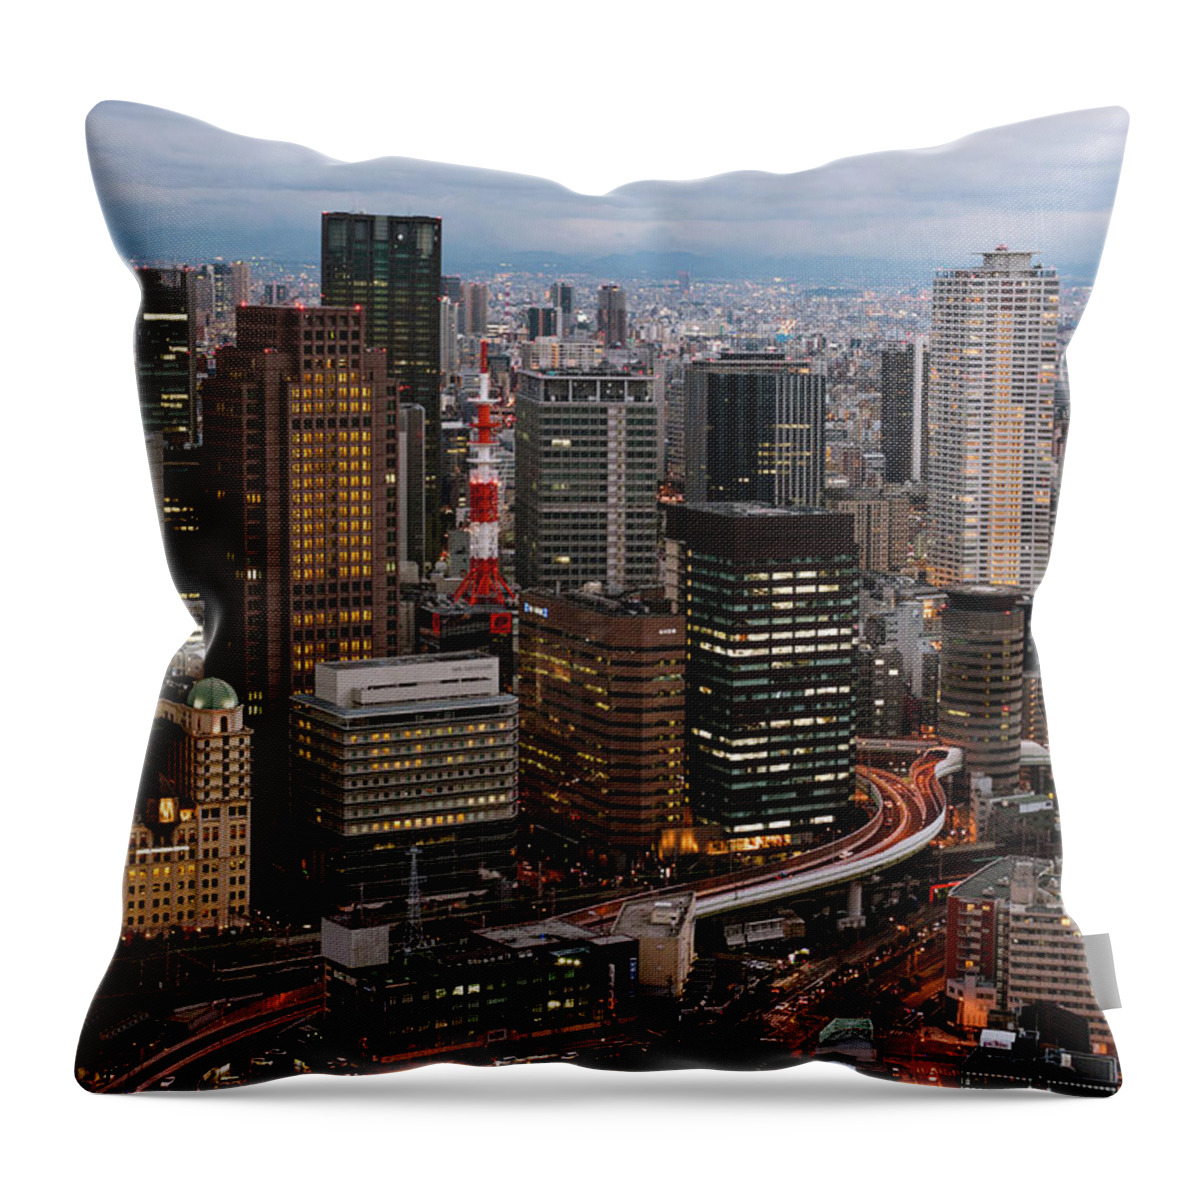 Built Structure Throw Pillow featuring the photograph Osaka City by Ebiq